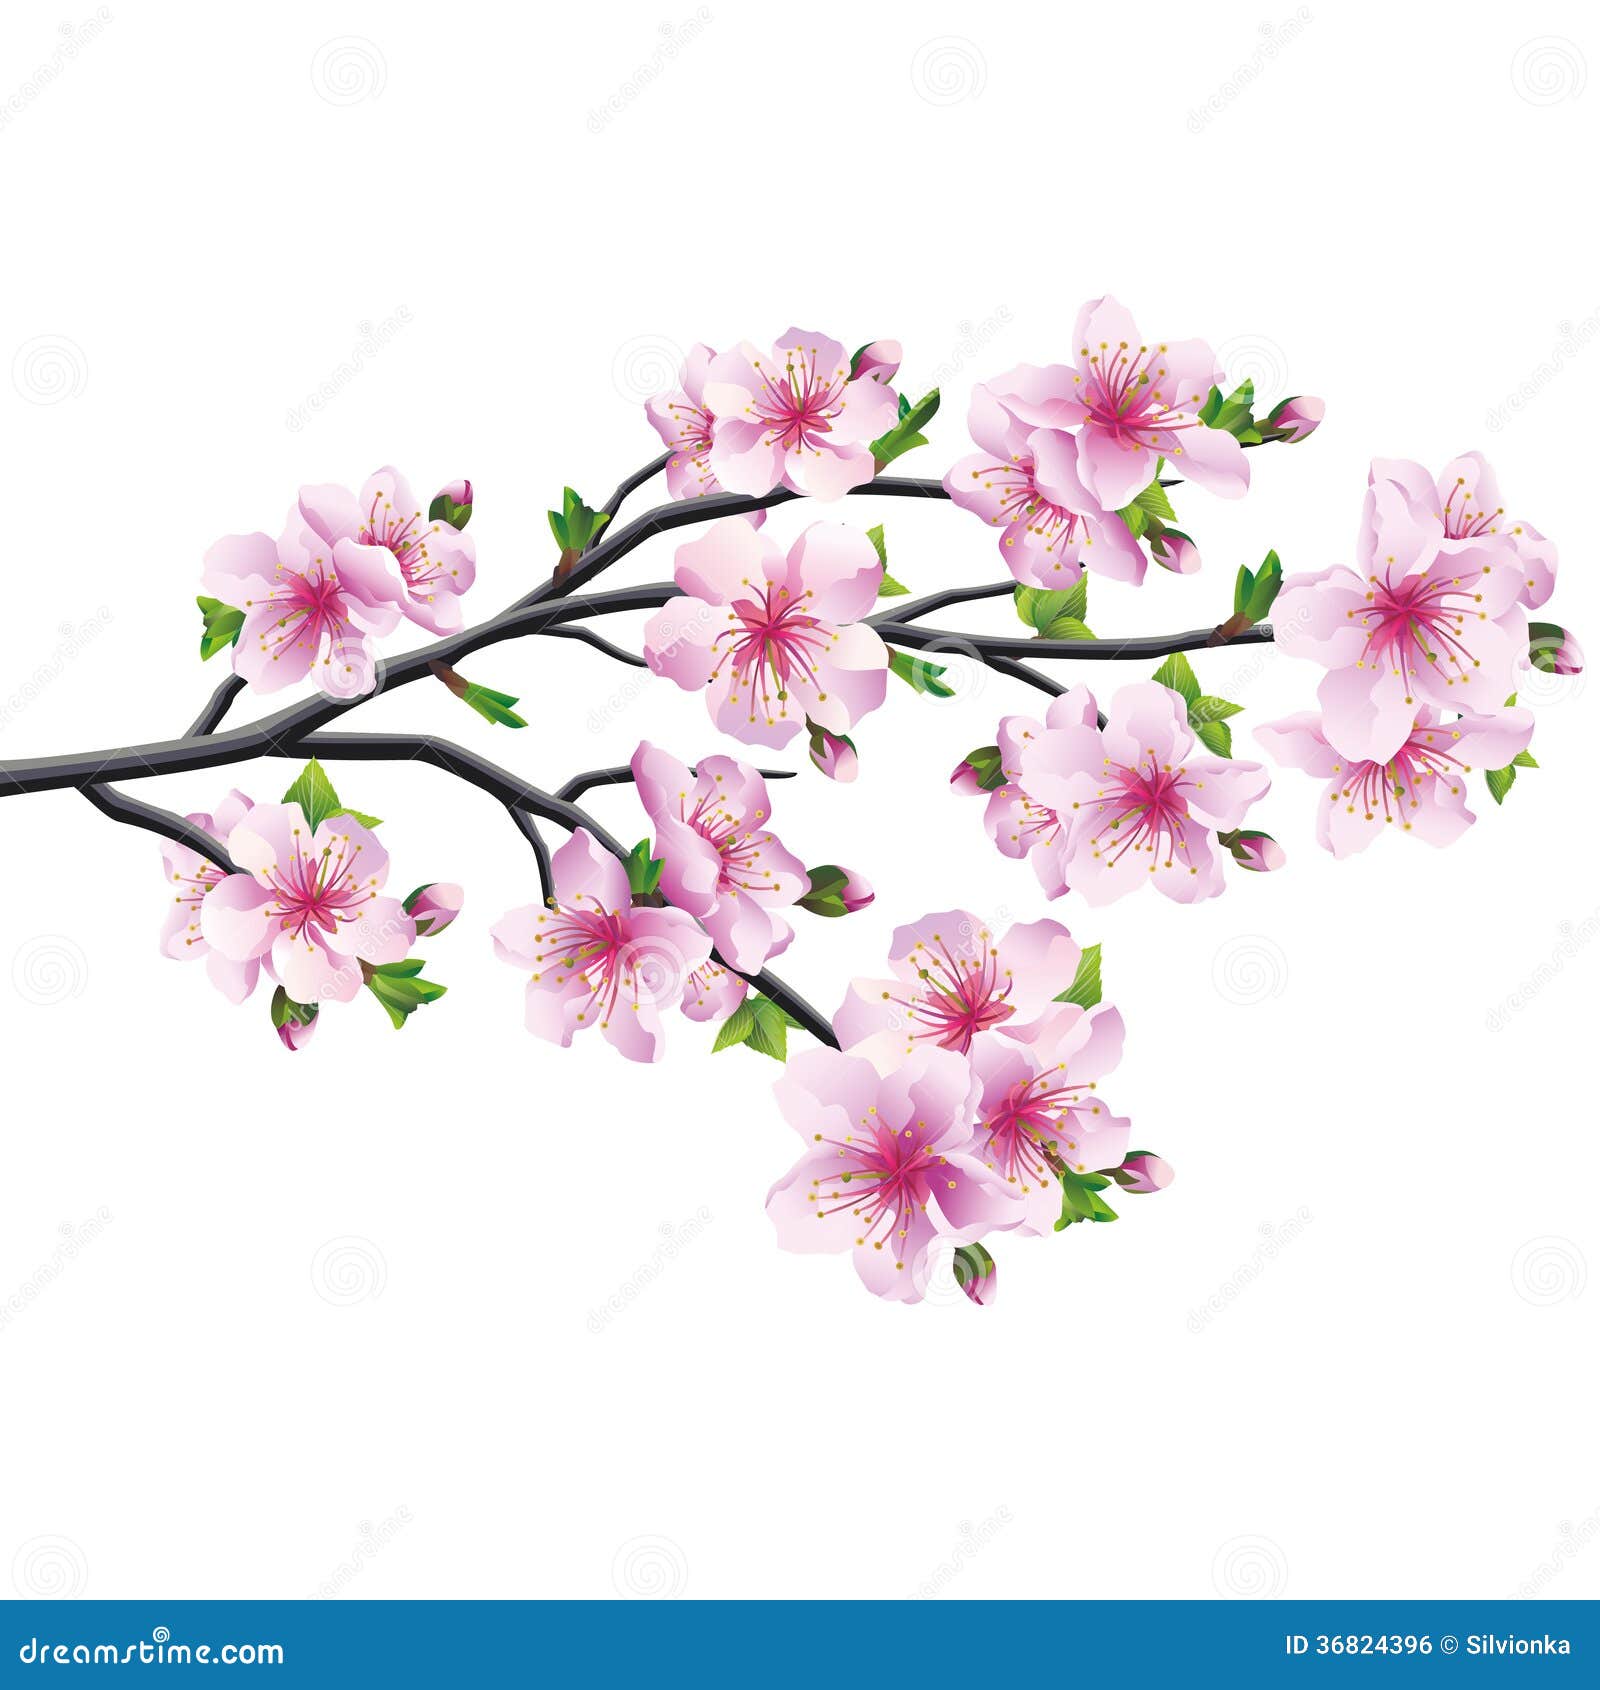 cherry blossom, japanese tree sakura